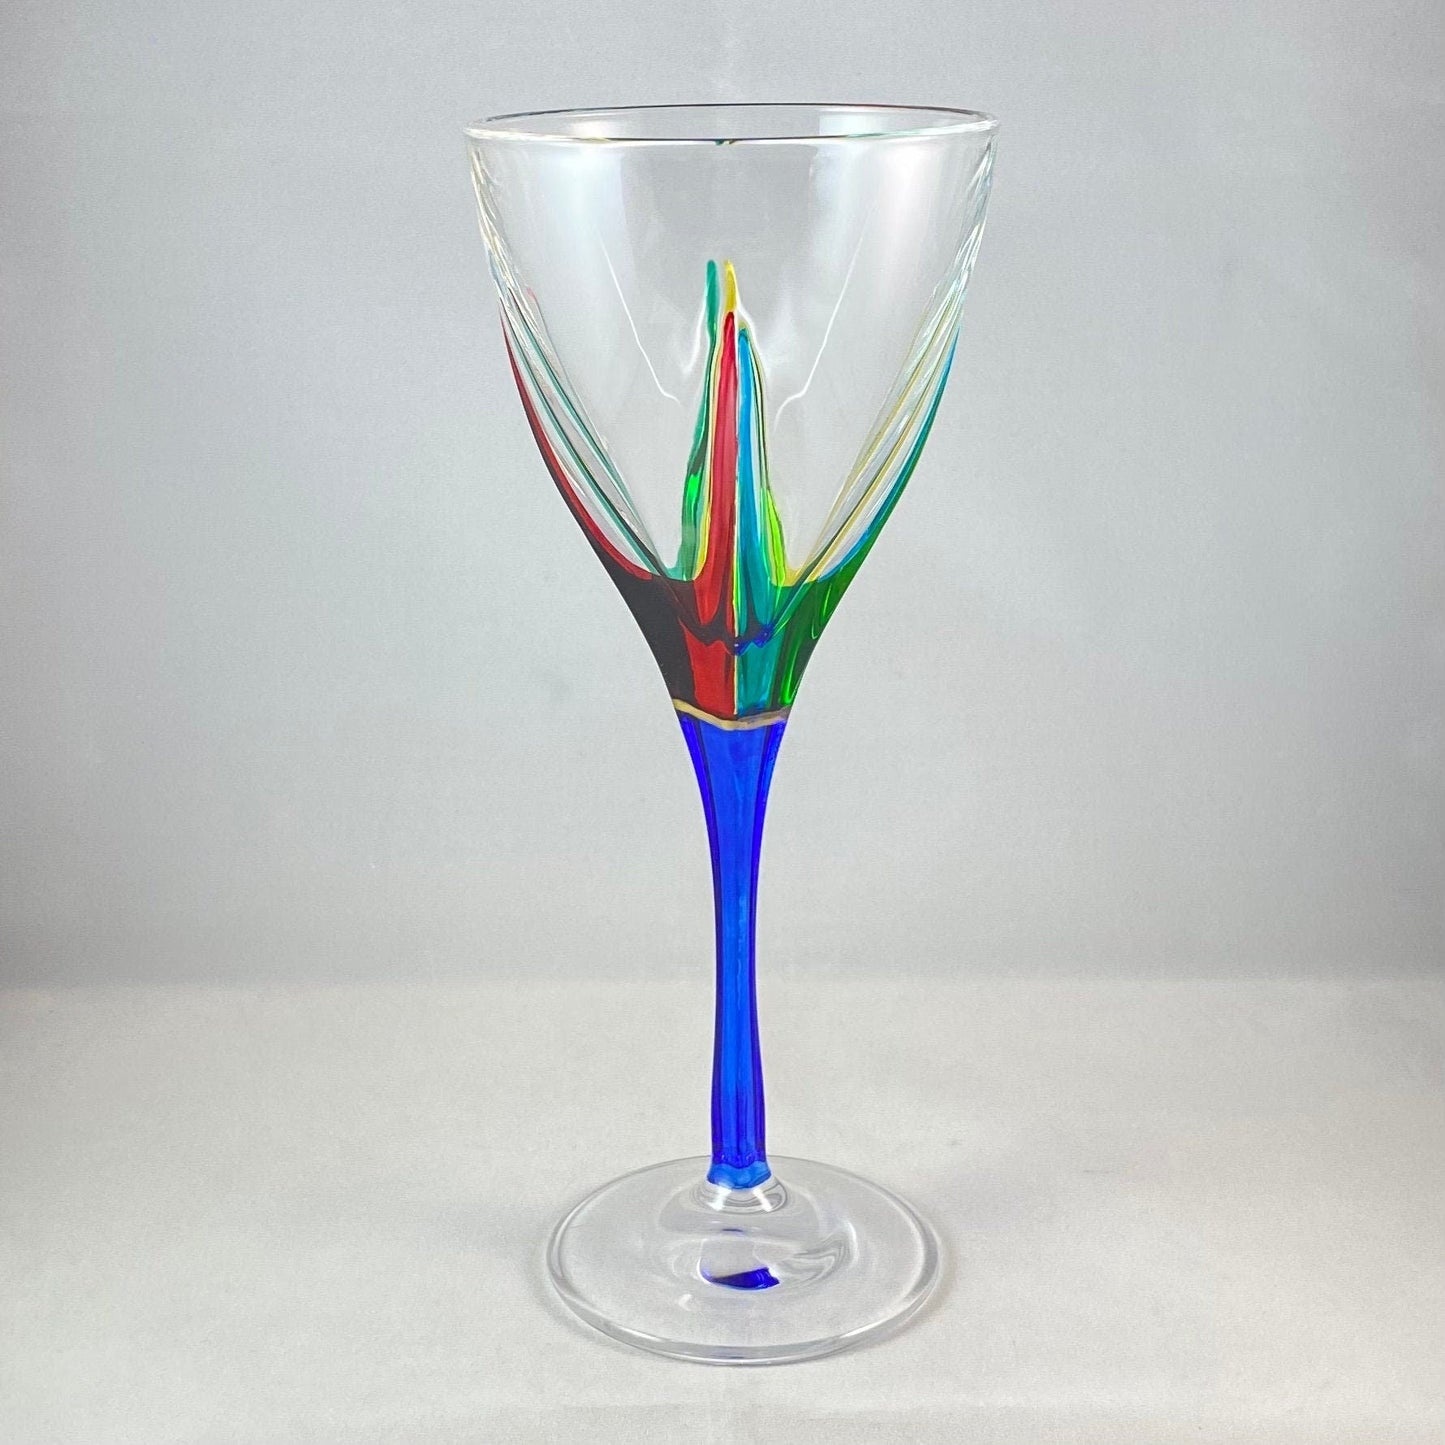 Blue Stem Fusion Venetian Glass Wine Glass - Handmade in Italy, Colorful Murano Glass